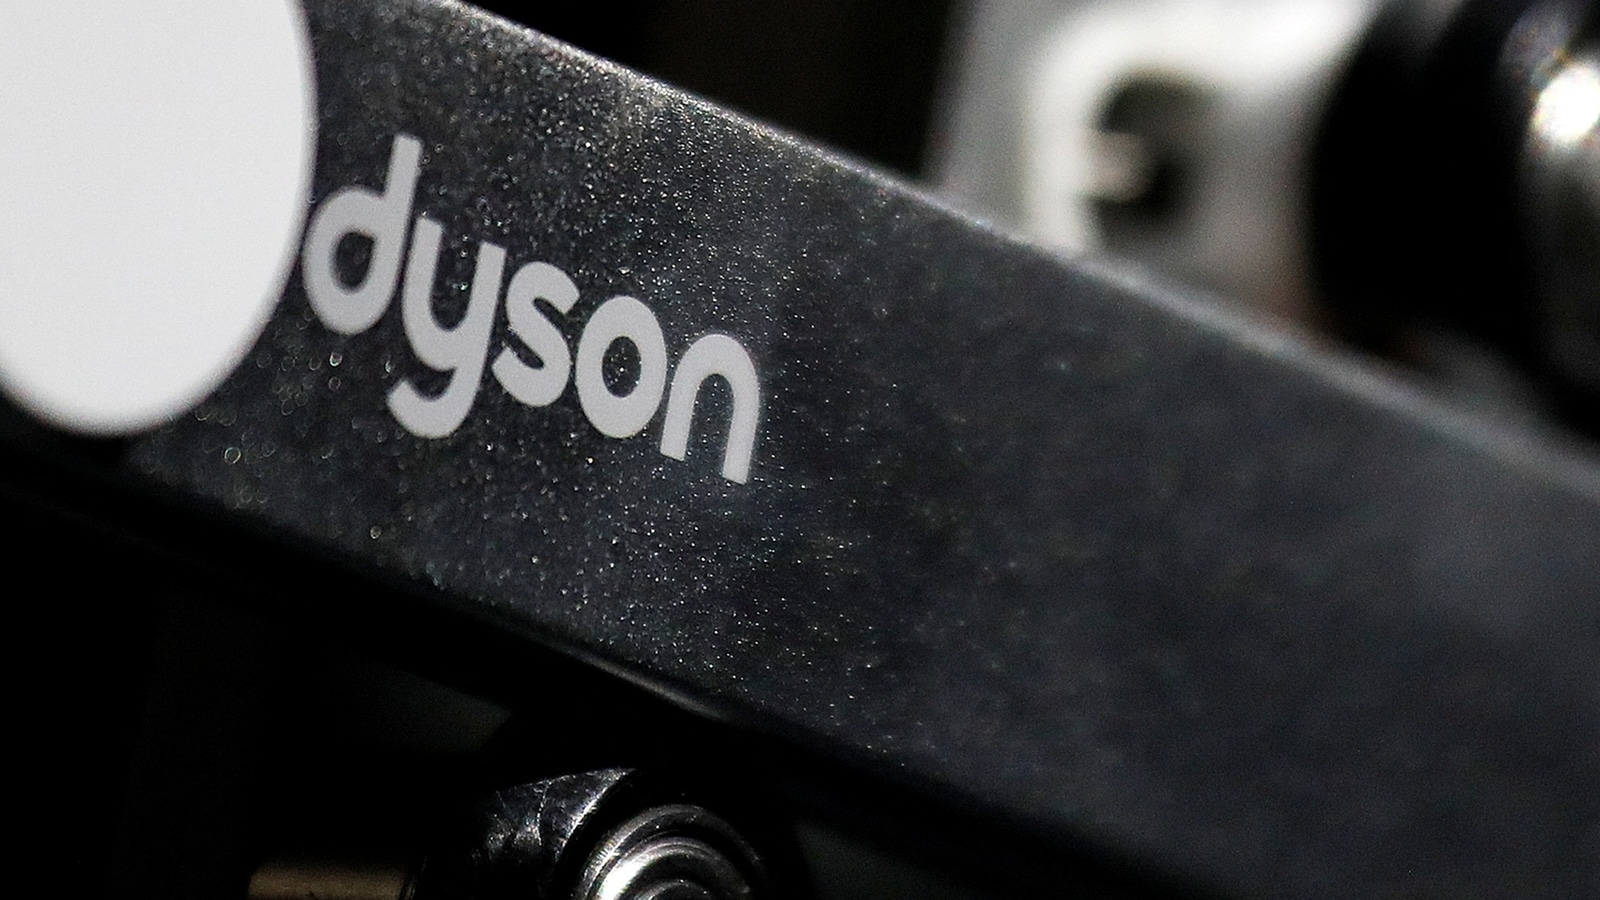 Dyson layoffs: Company to cut around 1,000 jobs in Britain